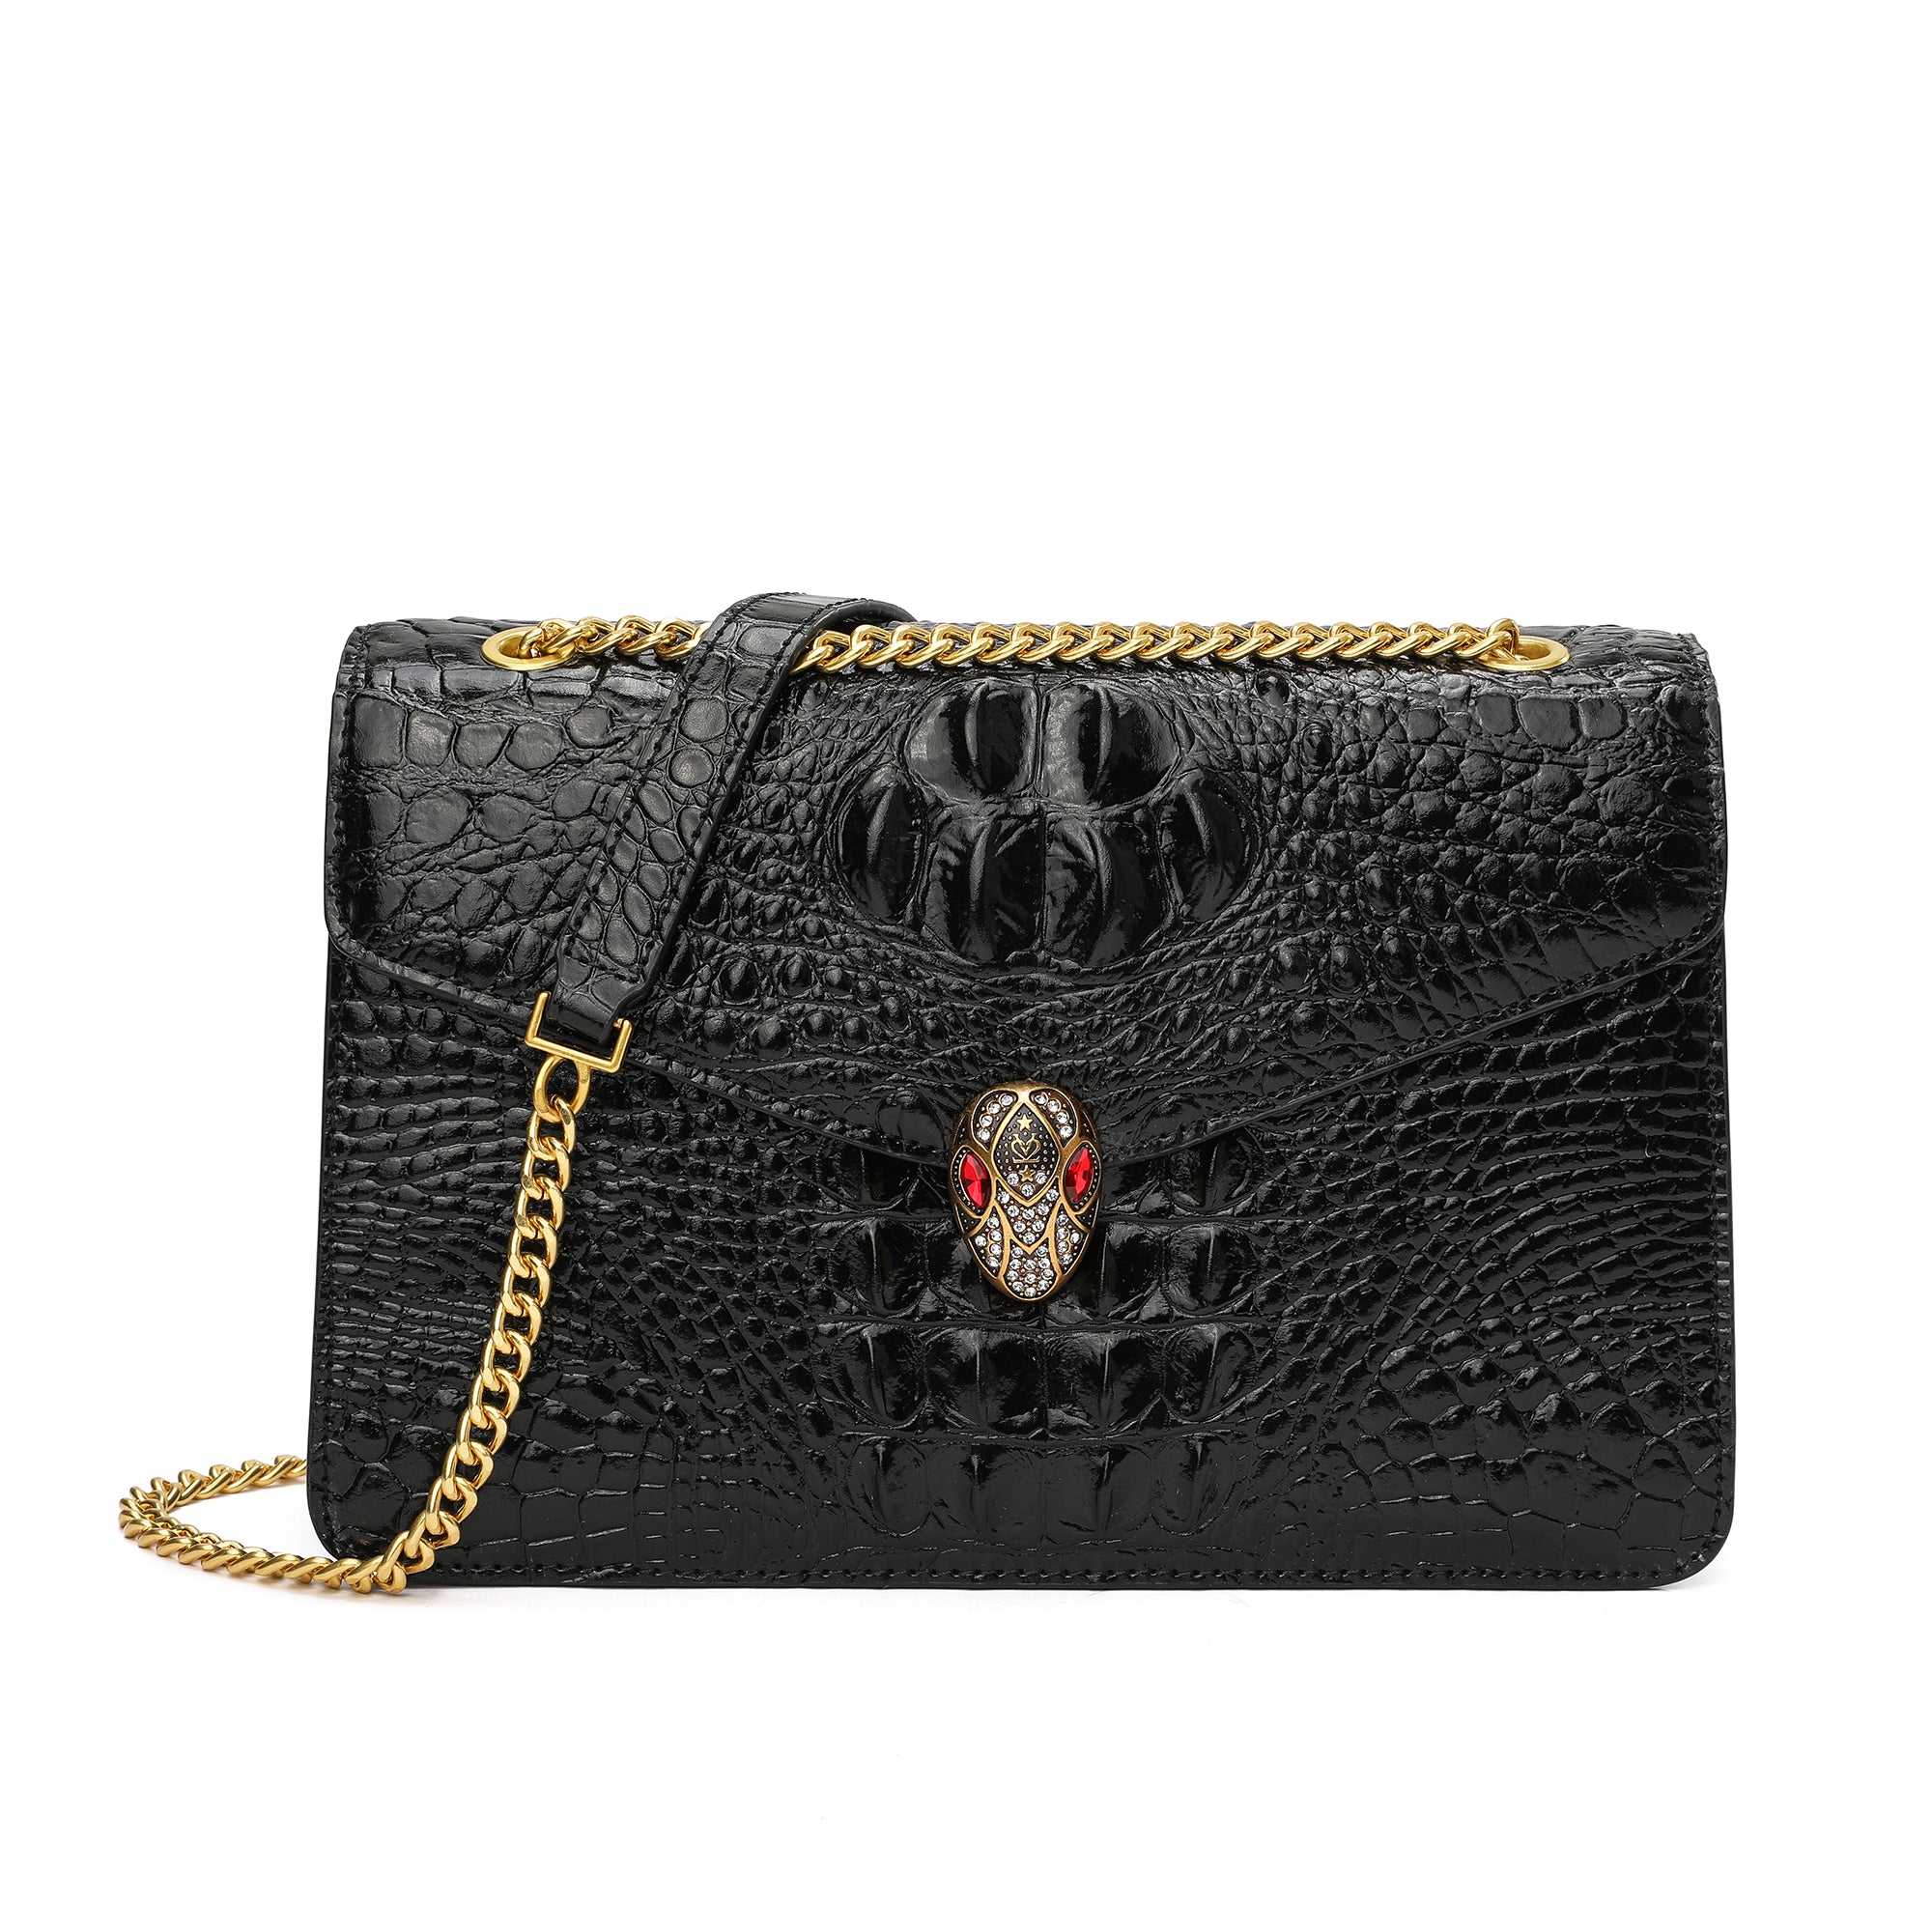 Bvlgari Authenticated Leather Handbag